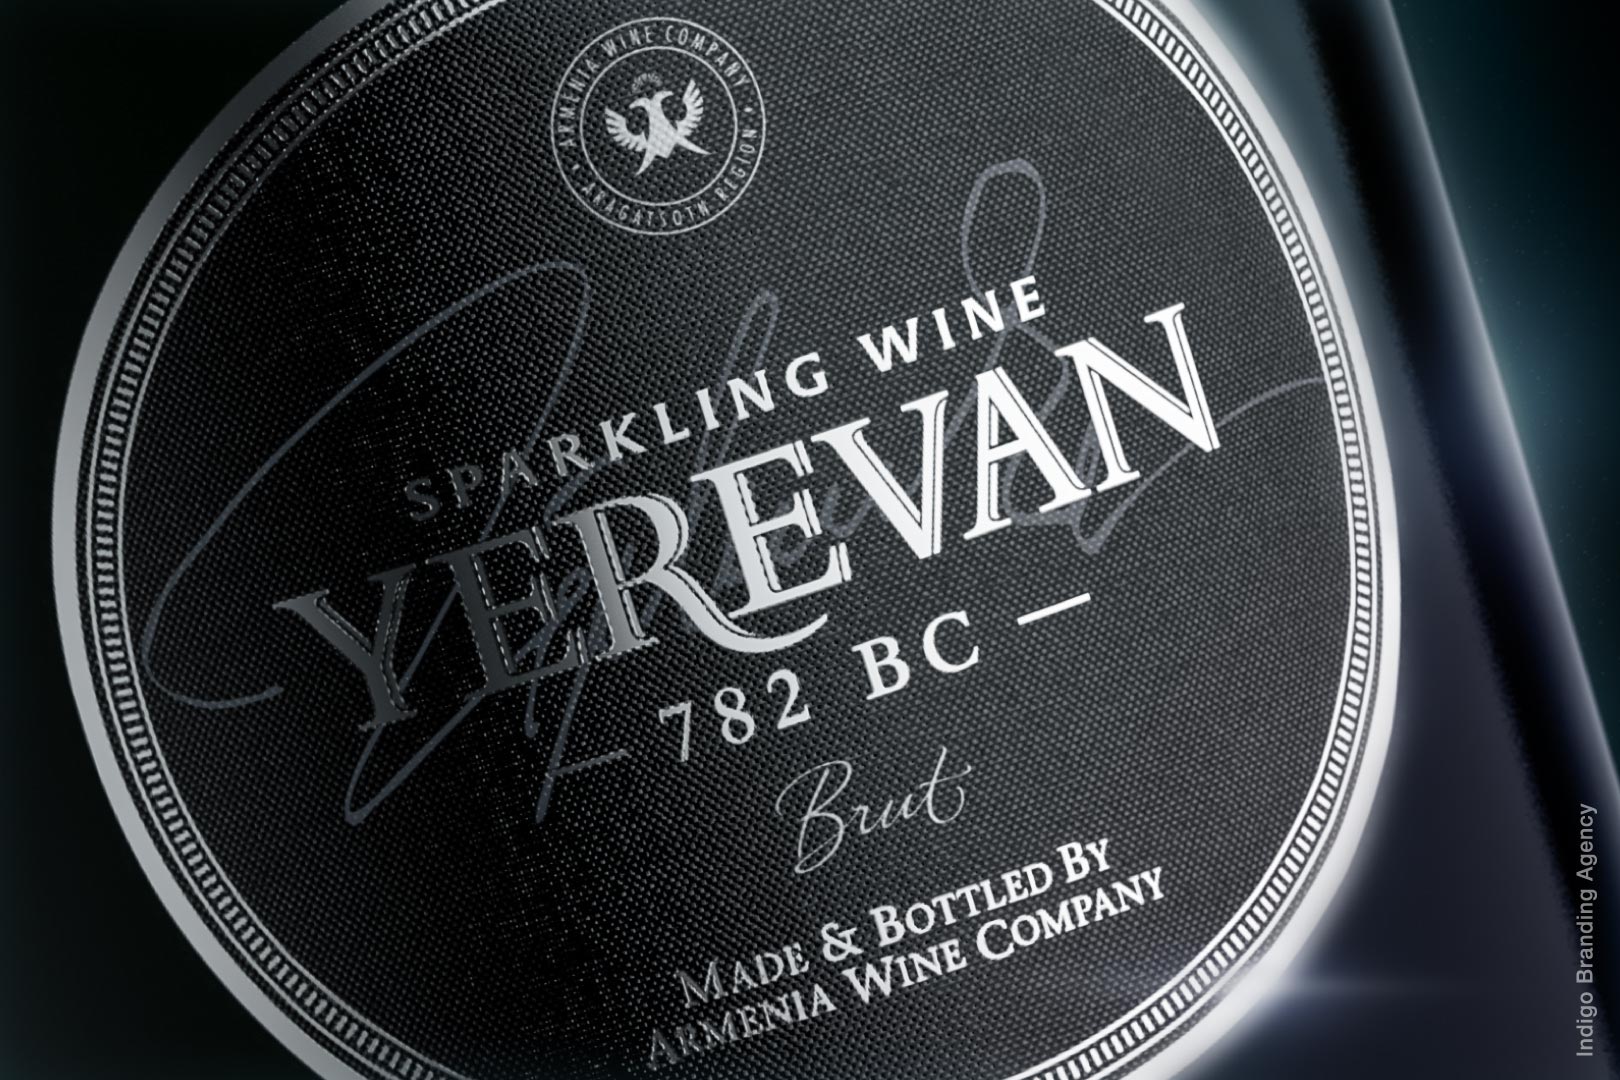 Yerevan Sparkling Wine branding and labeling design by Indigo branding